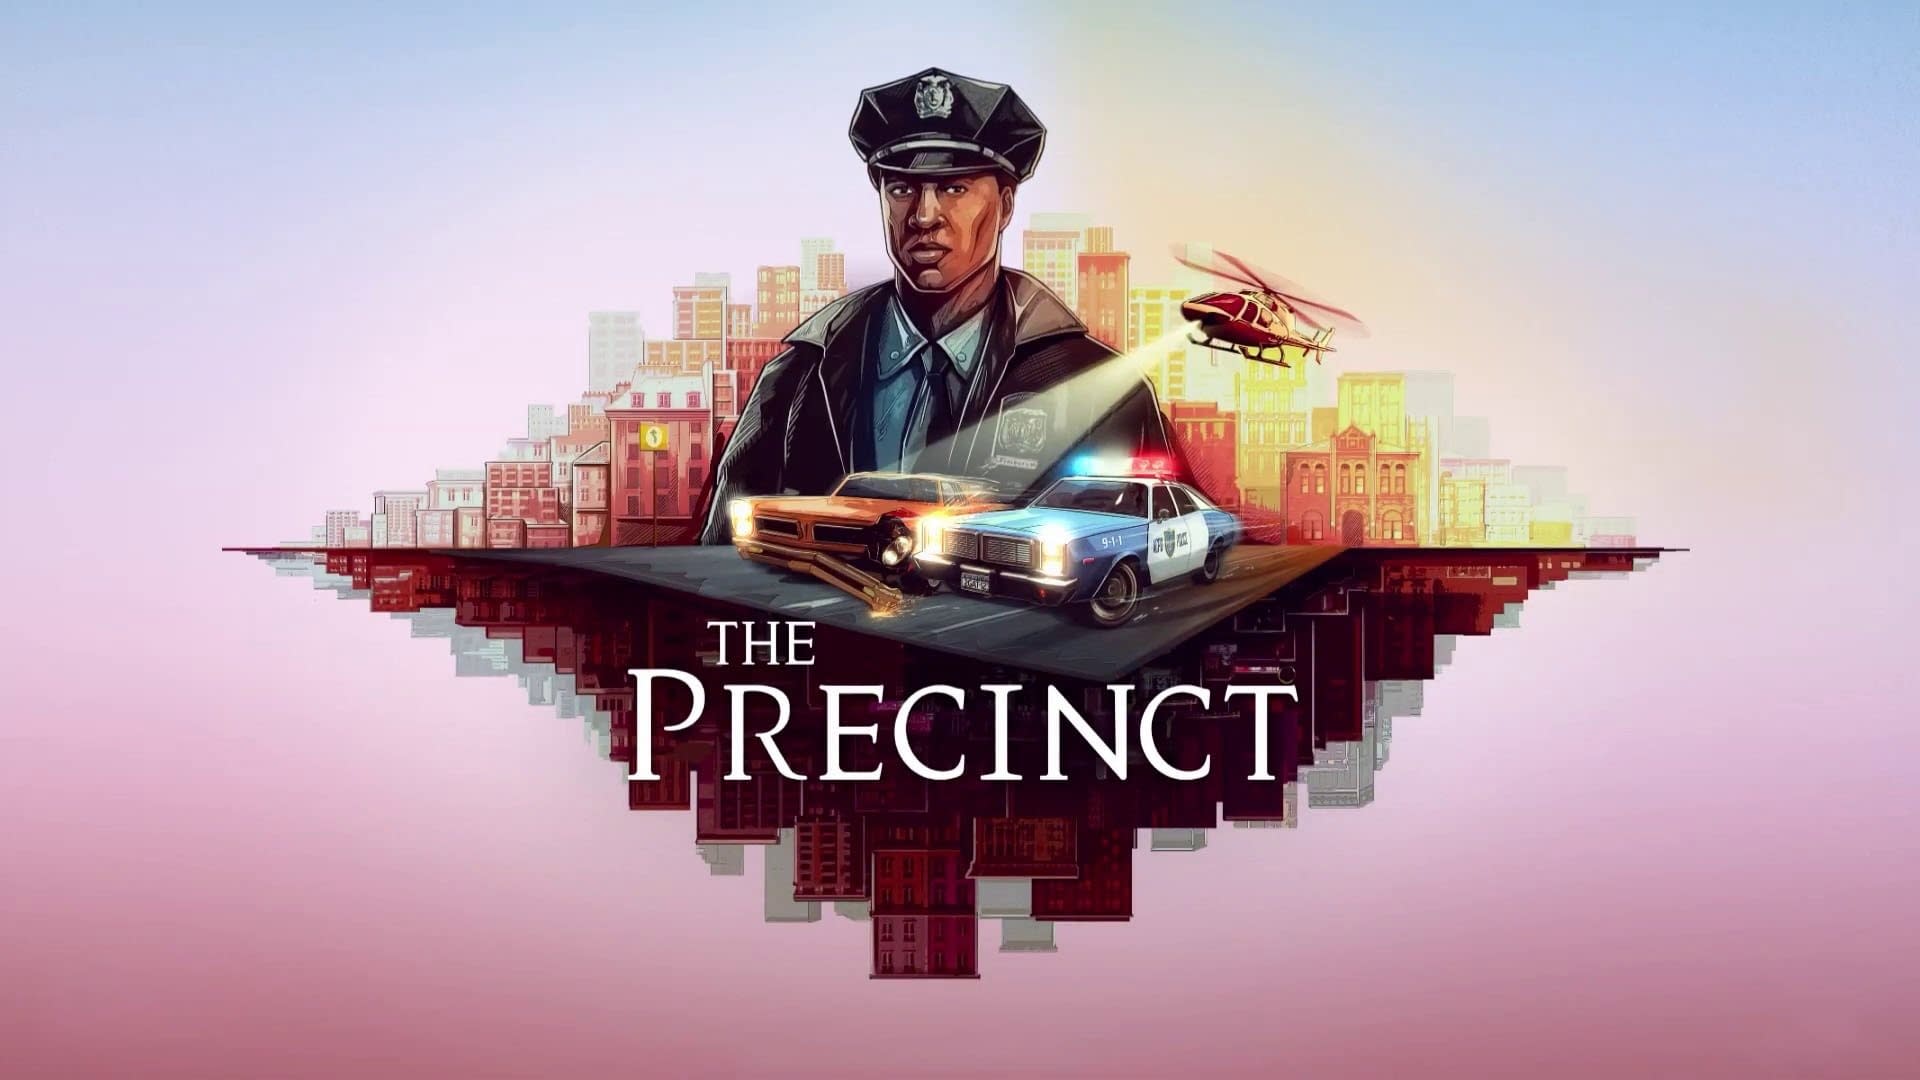 The Precinct Announcement for Detective Investigation Theme Severler